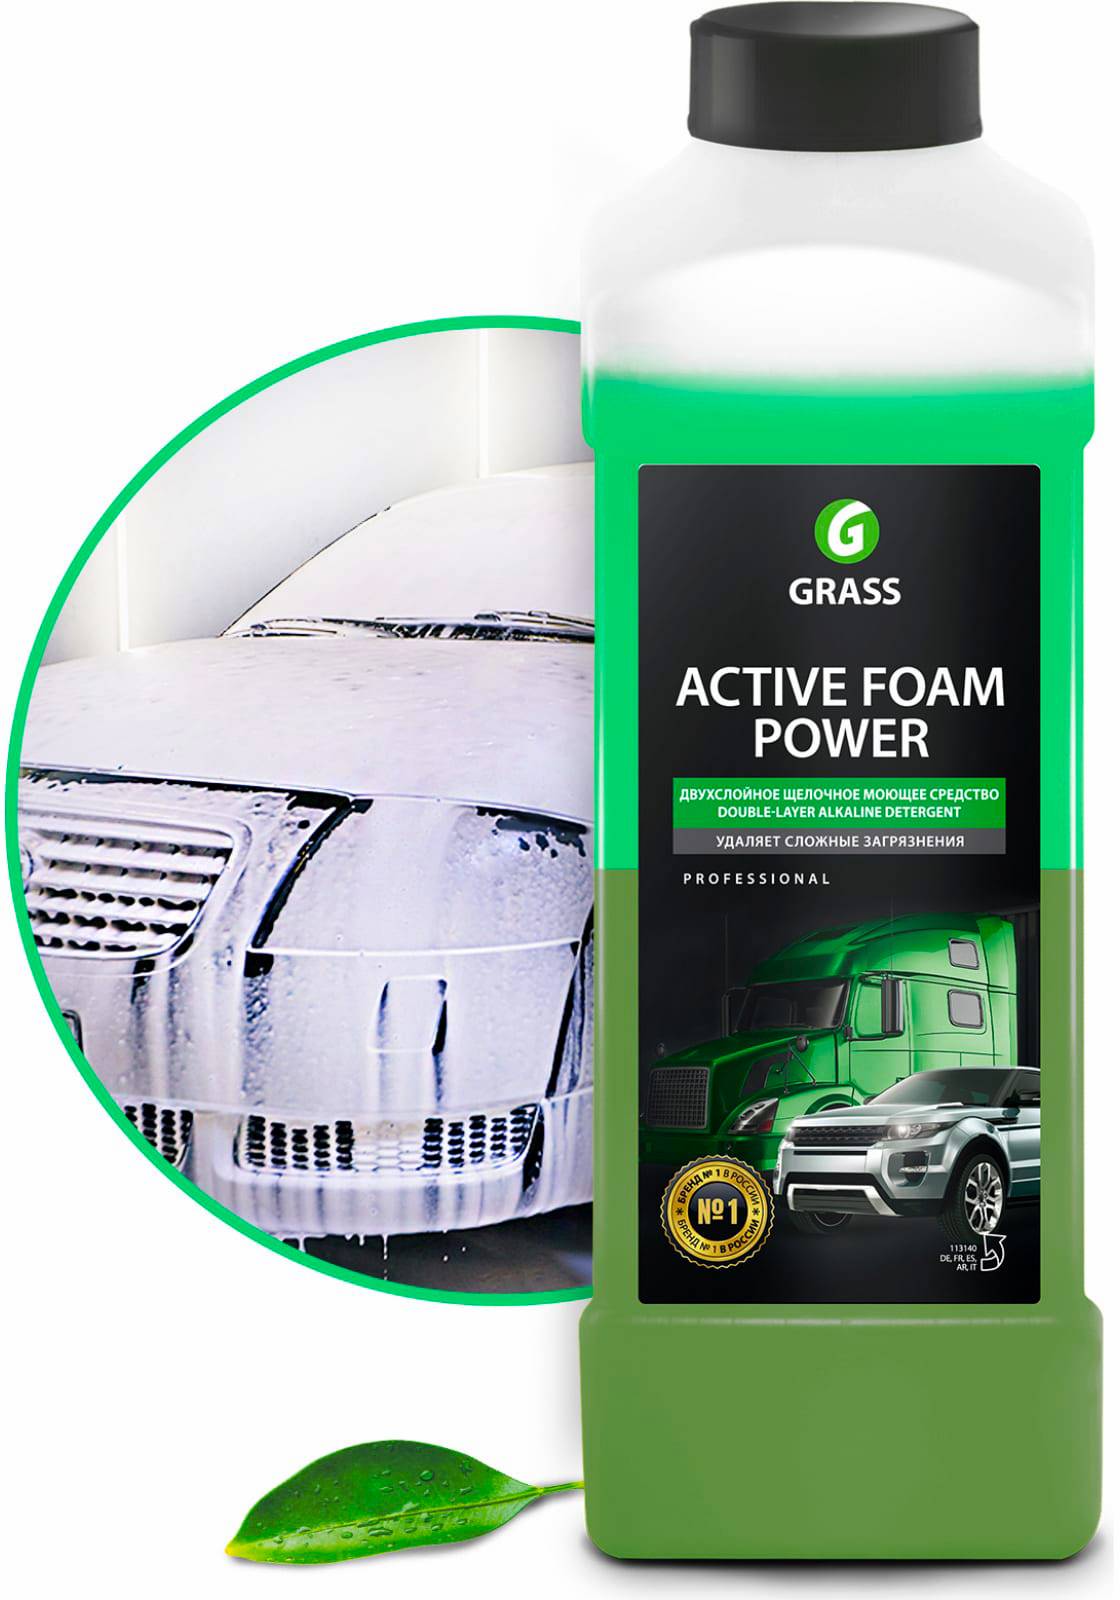 Активная пена GRASS "Active Foam Power" 1л.